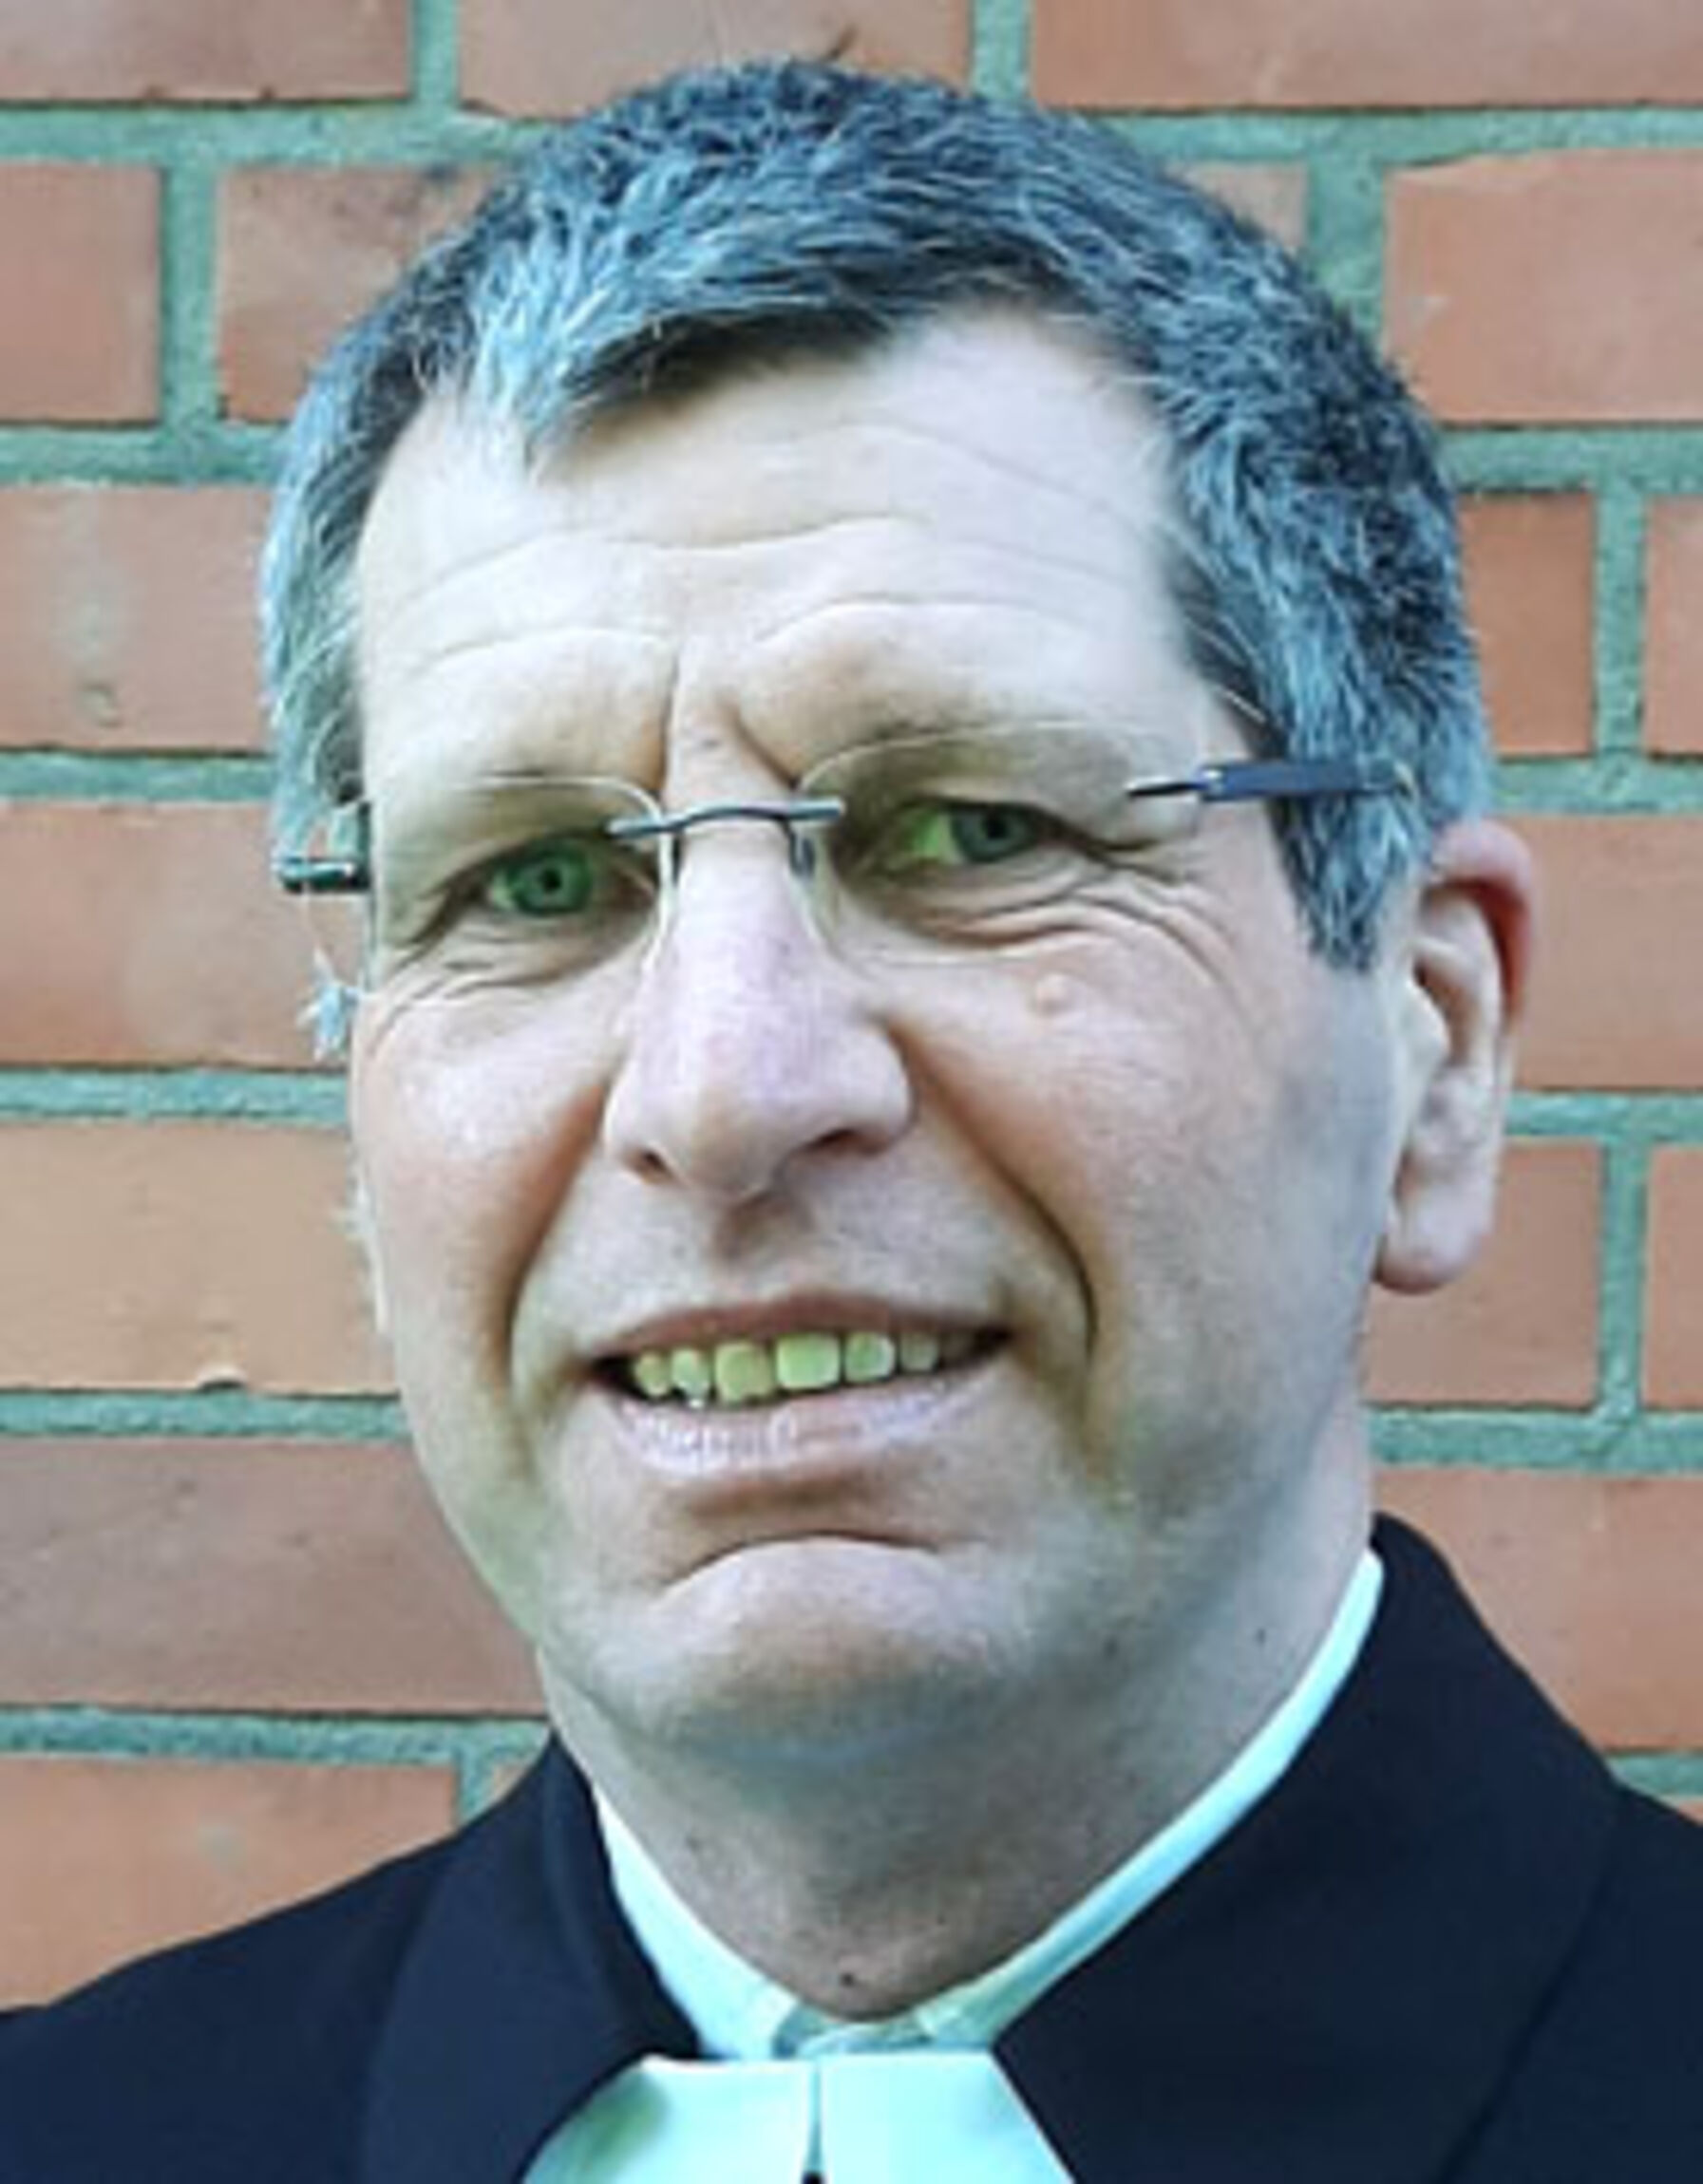 Pastor Andreas Laack